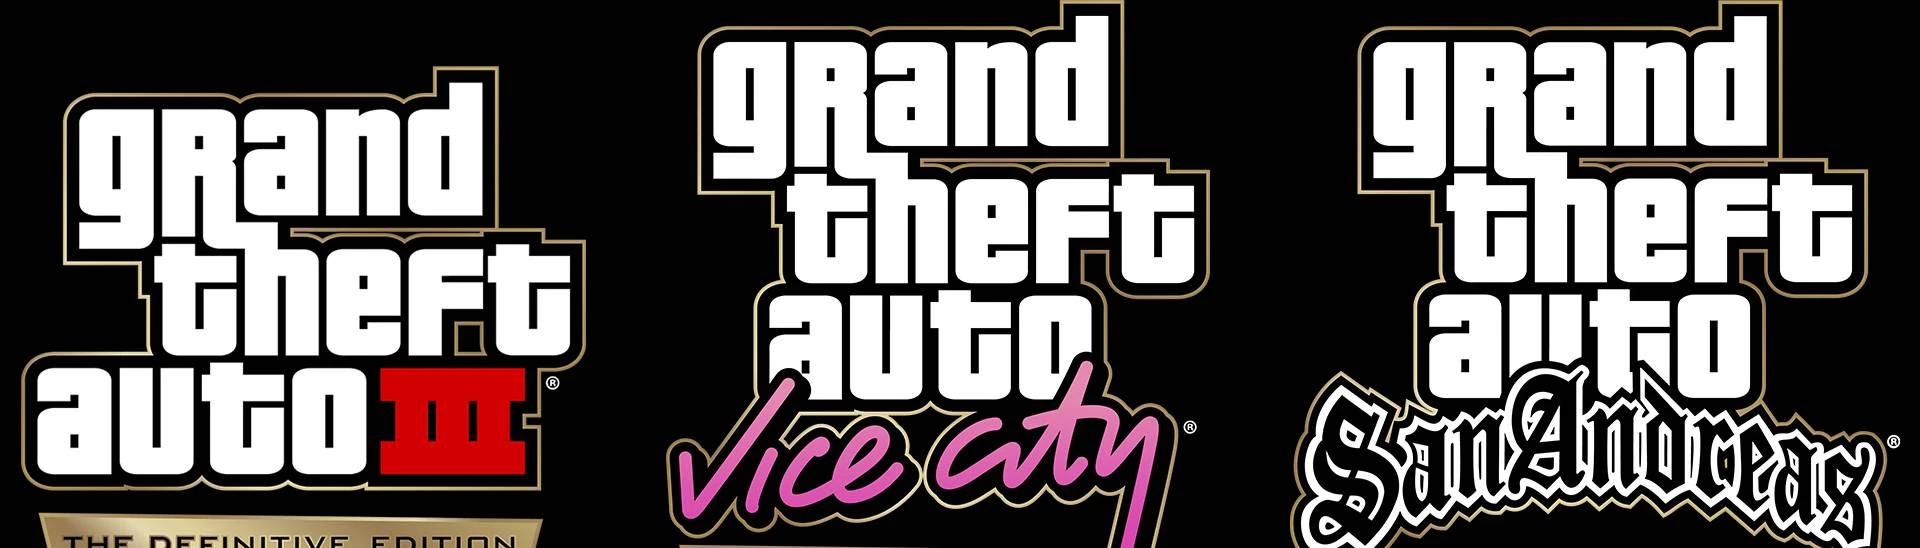 GTA Vice City Radio Stations: Full List of All Songs & Music